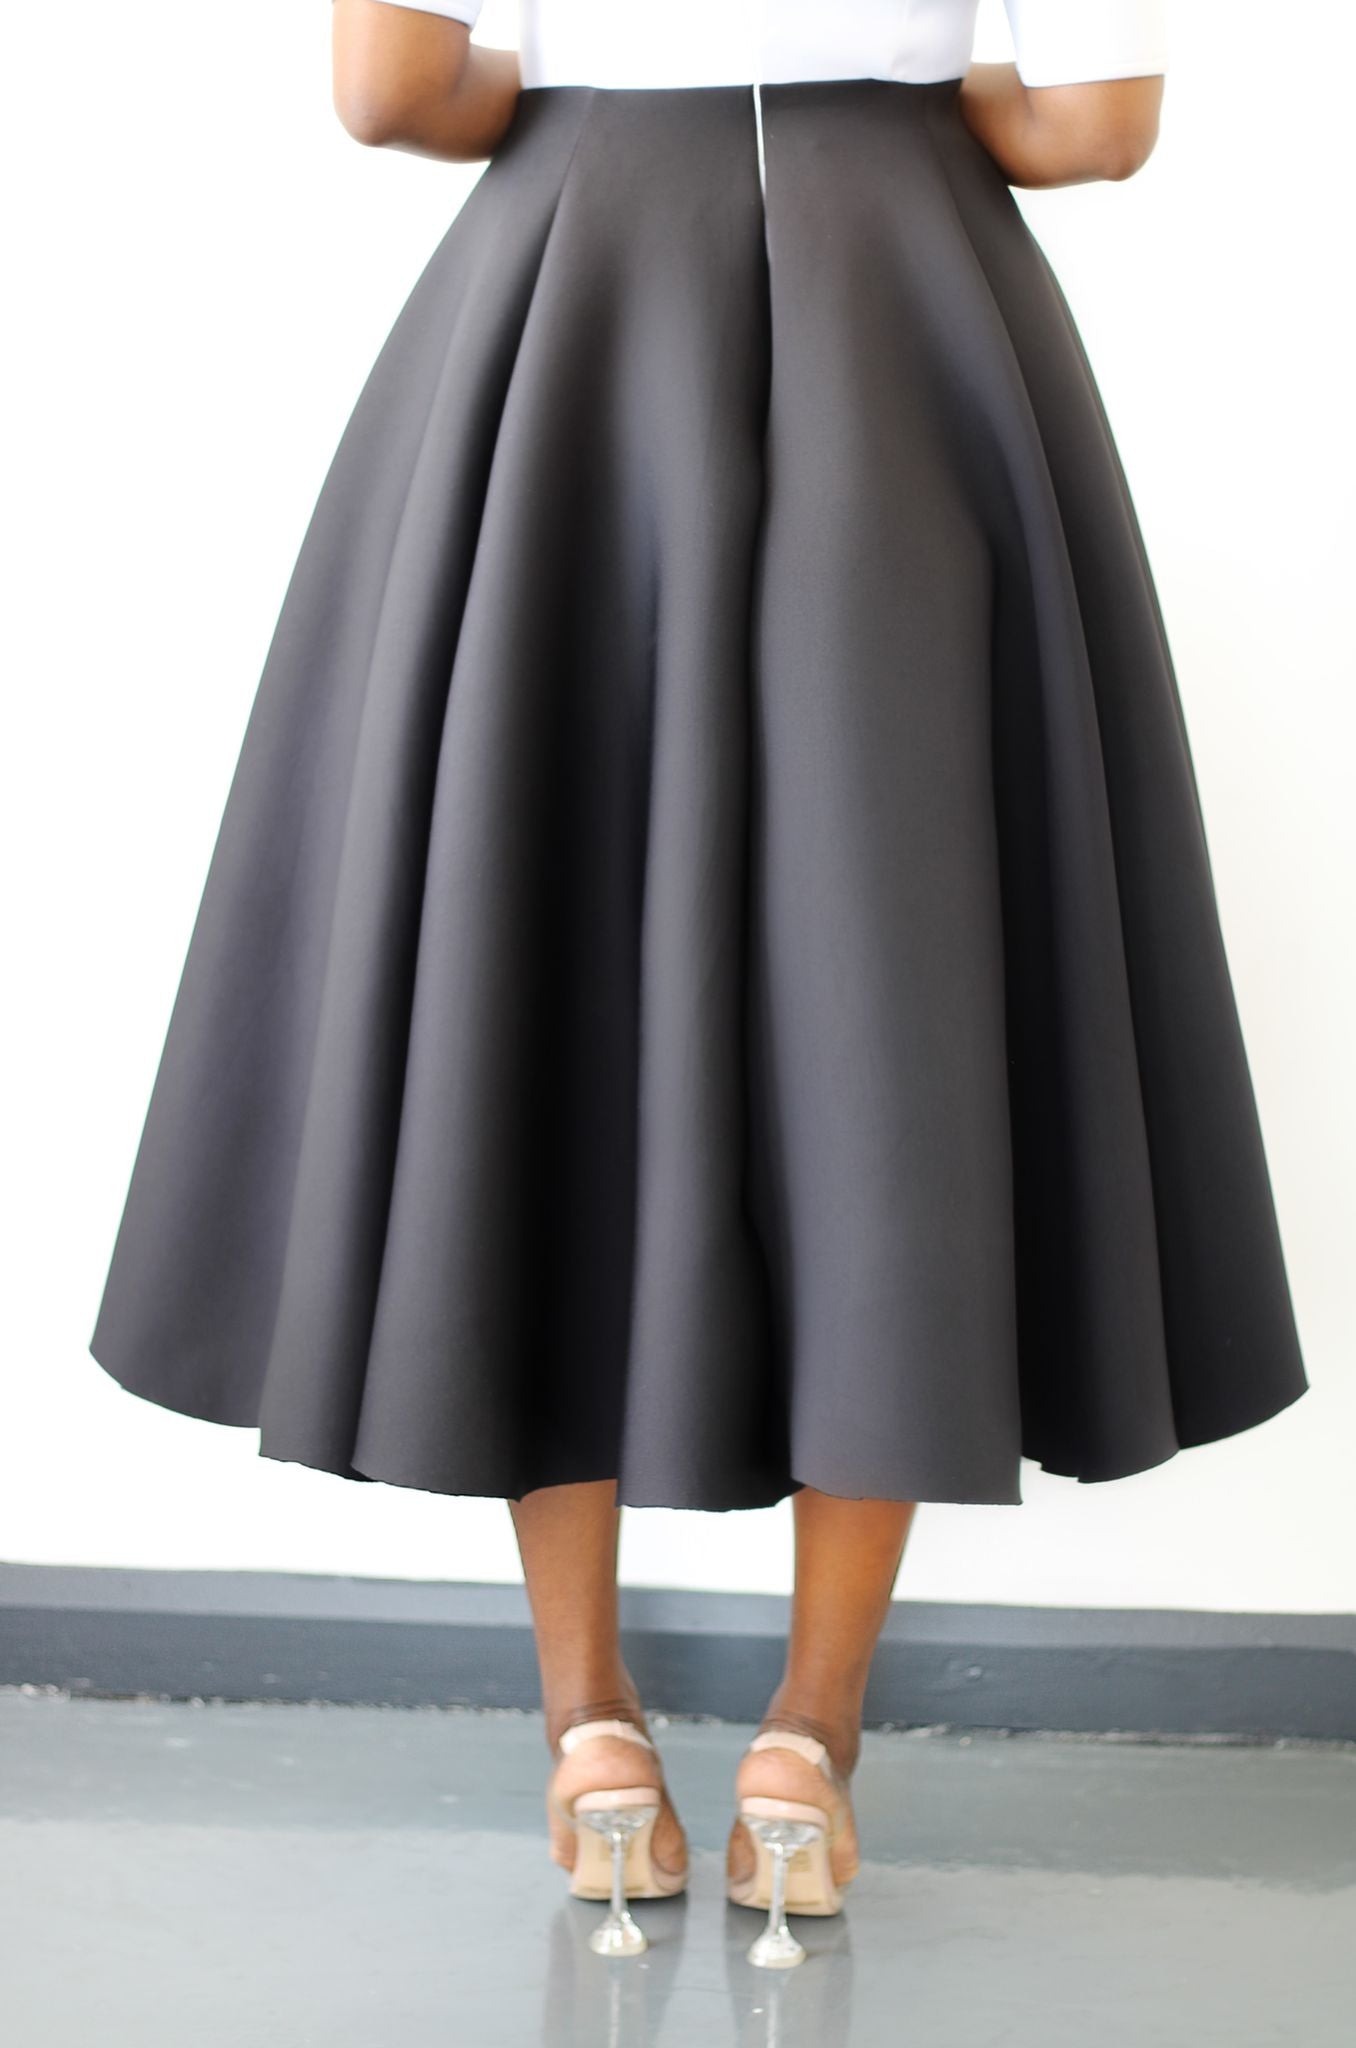 Dress with Petticoat